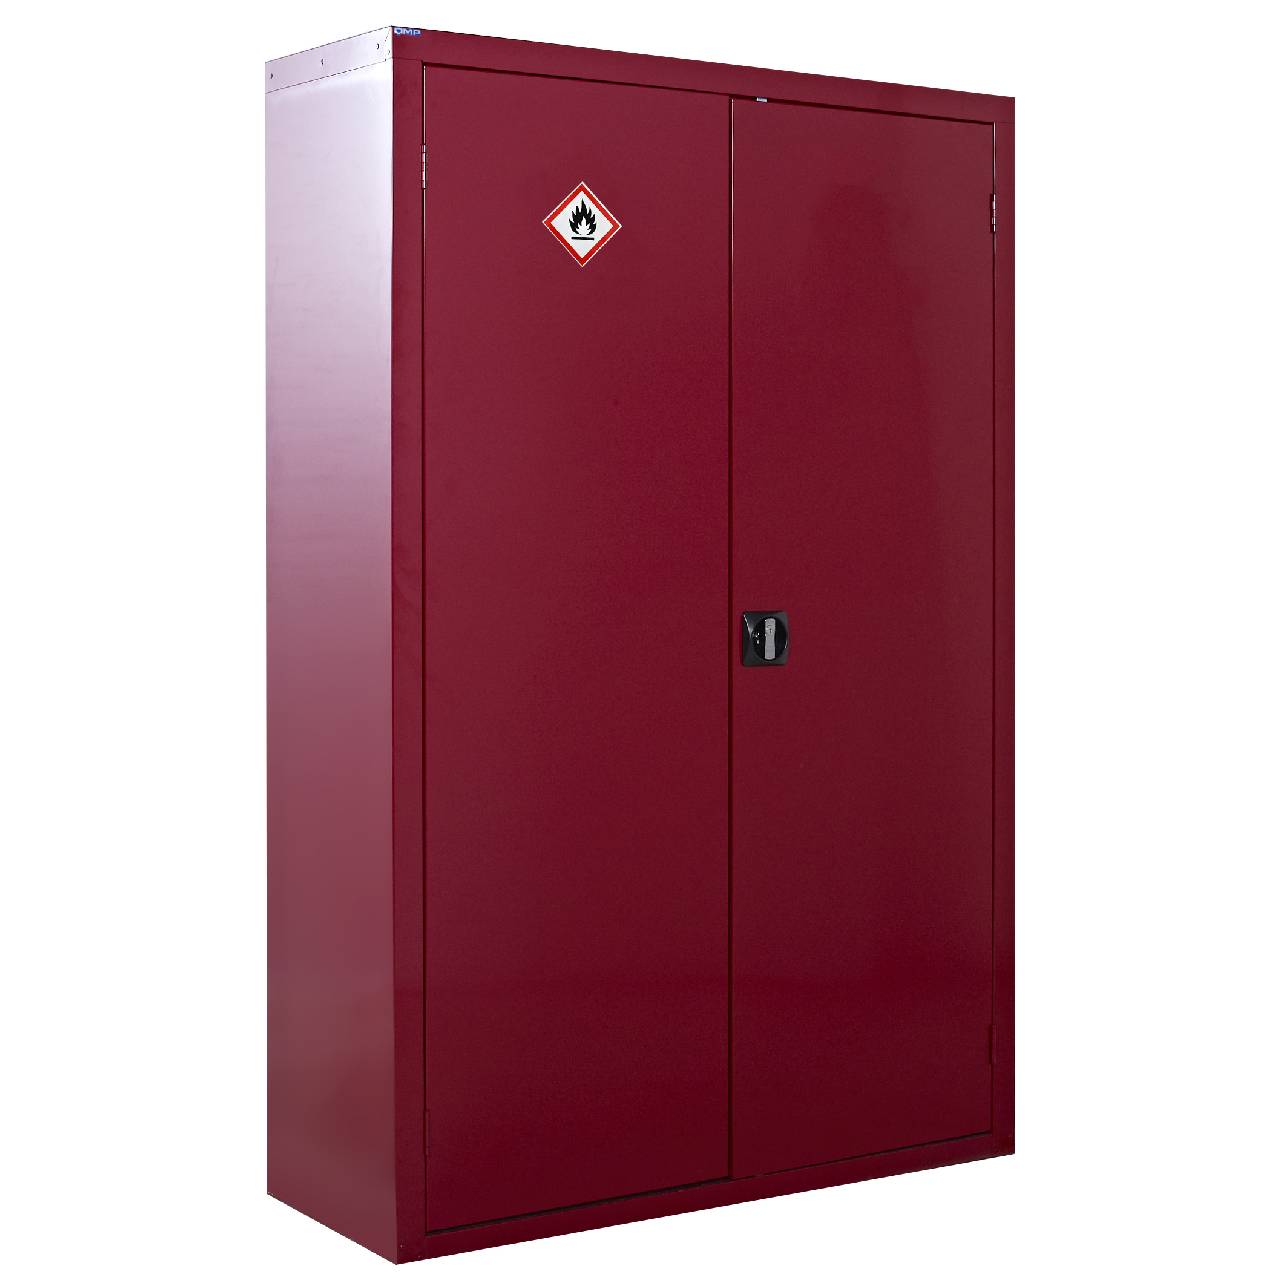 QMP Flammable Liquids Floor Standing Cabinets - 1800H x 1200W x 460D mm